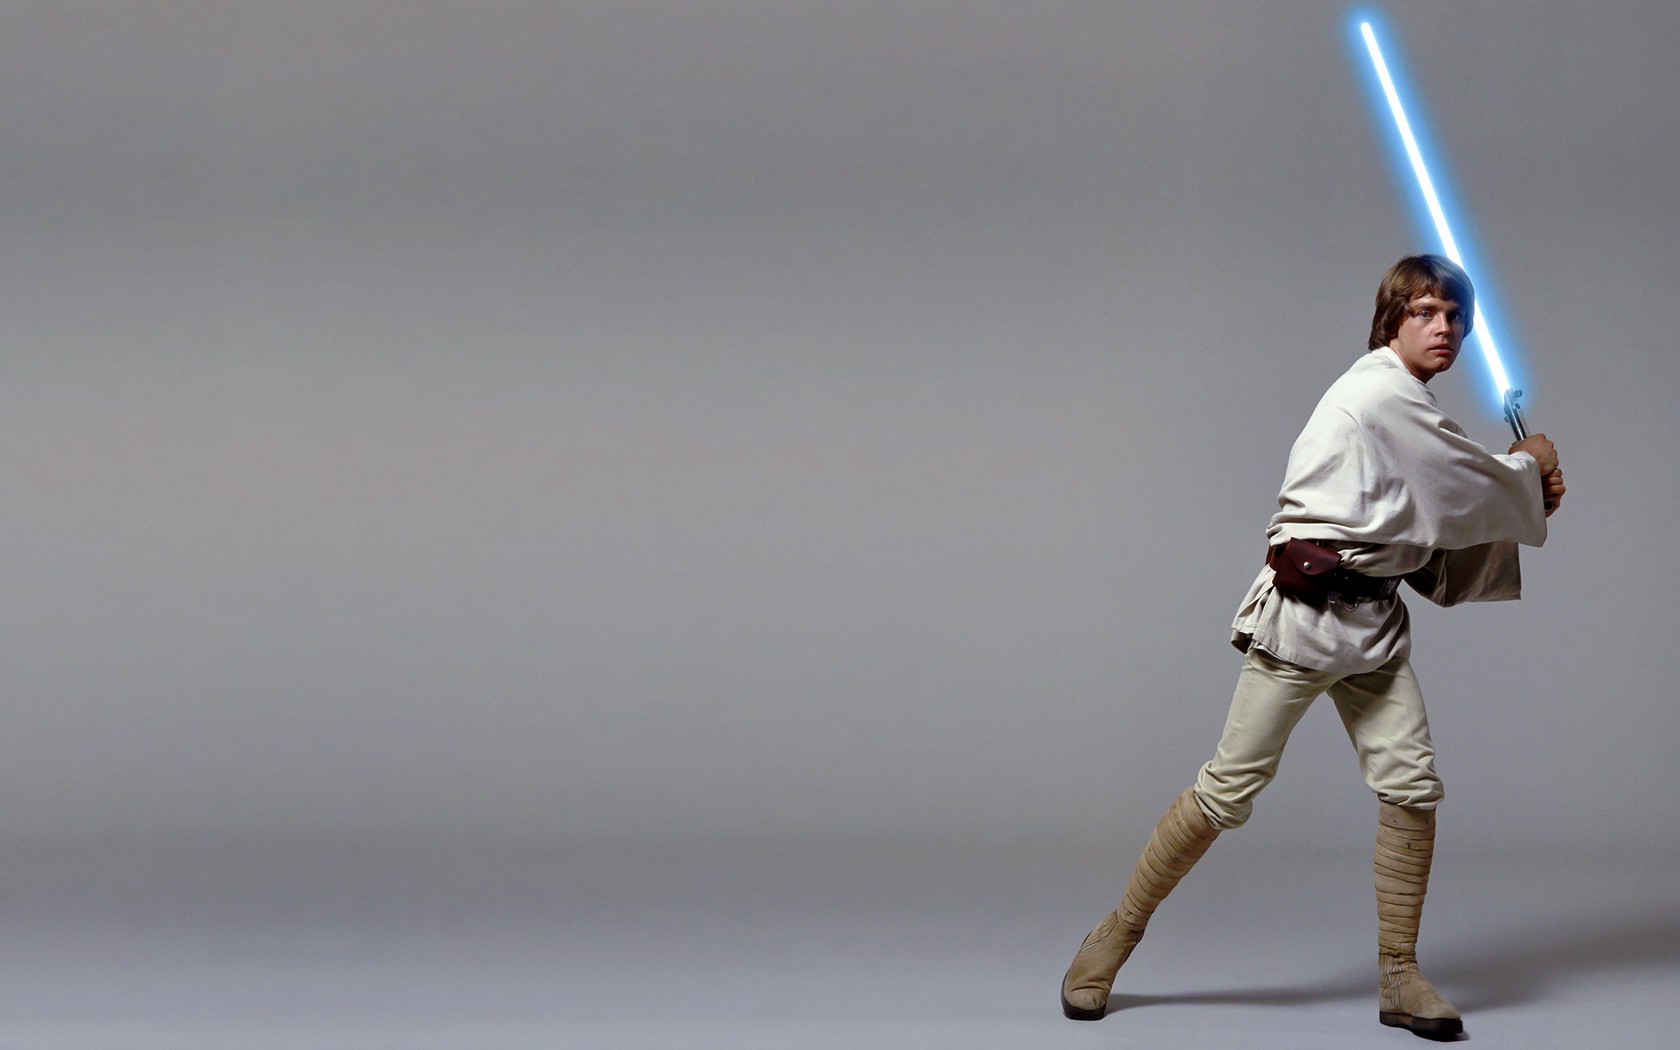 Star Wars Luke Skywalker Mark Hamill Lightsaber Wallpapers Hd Images, Photos, Reviews